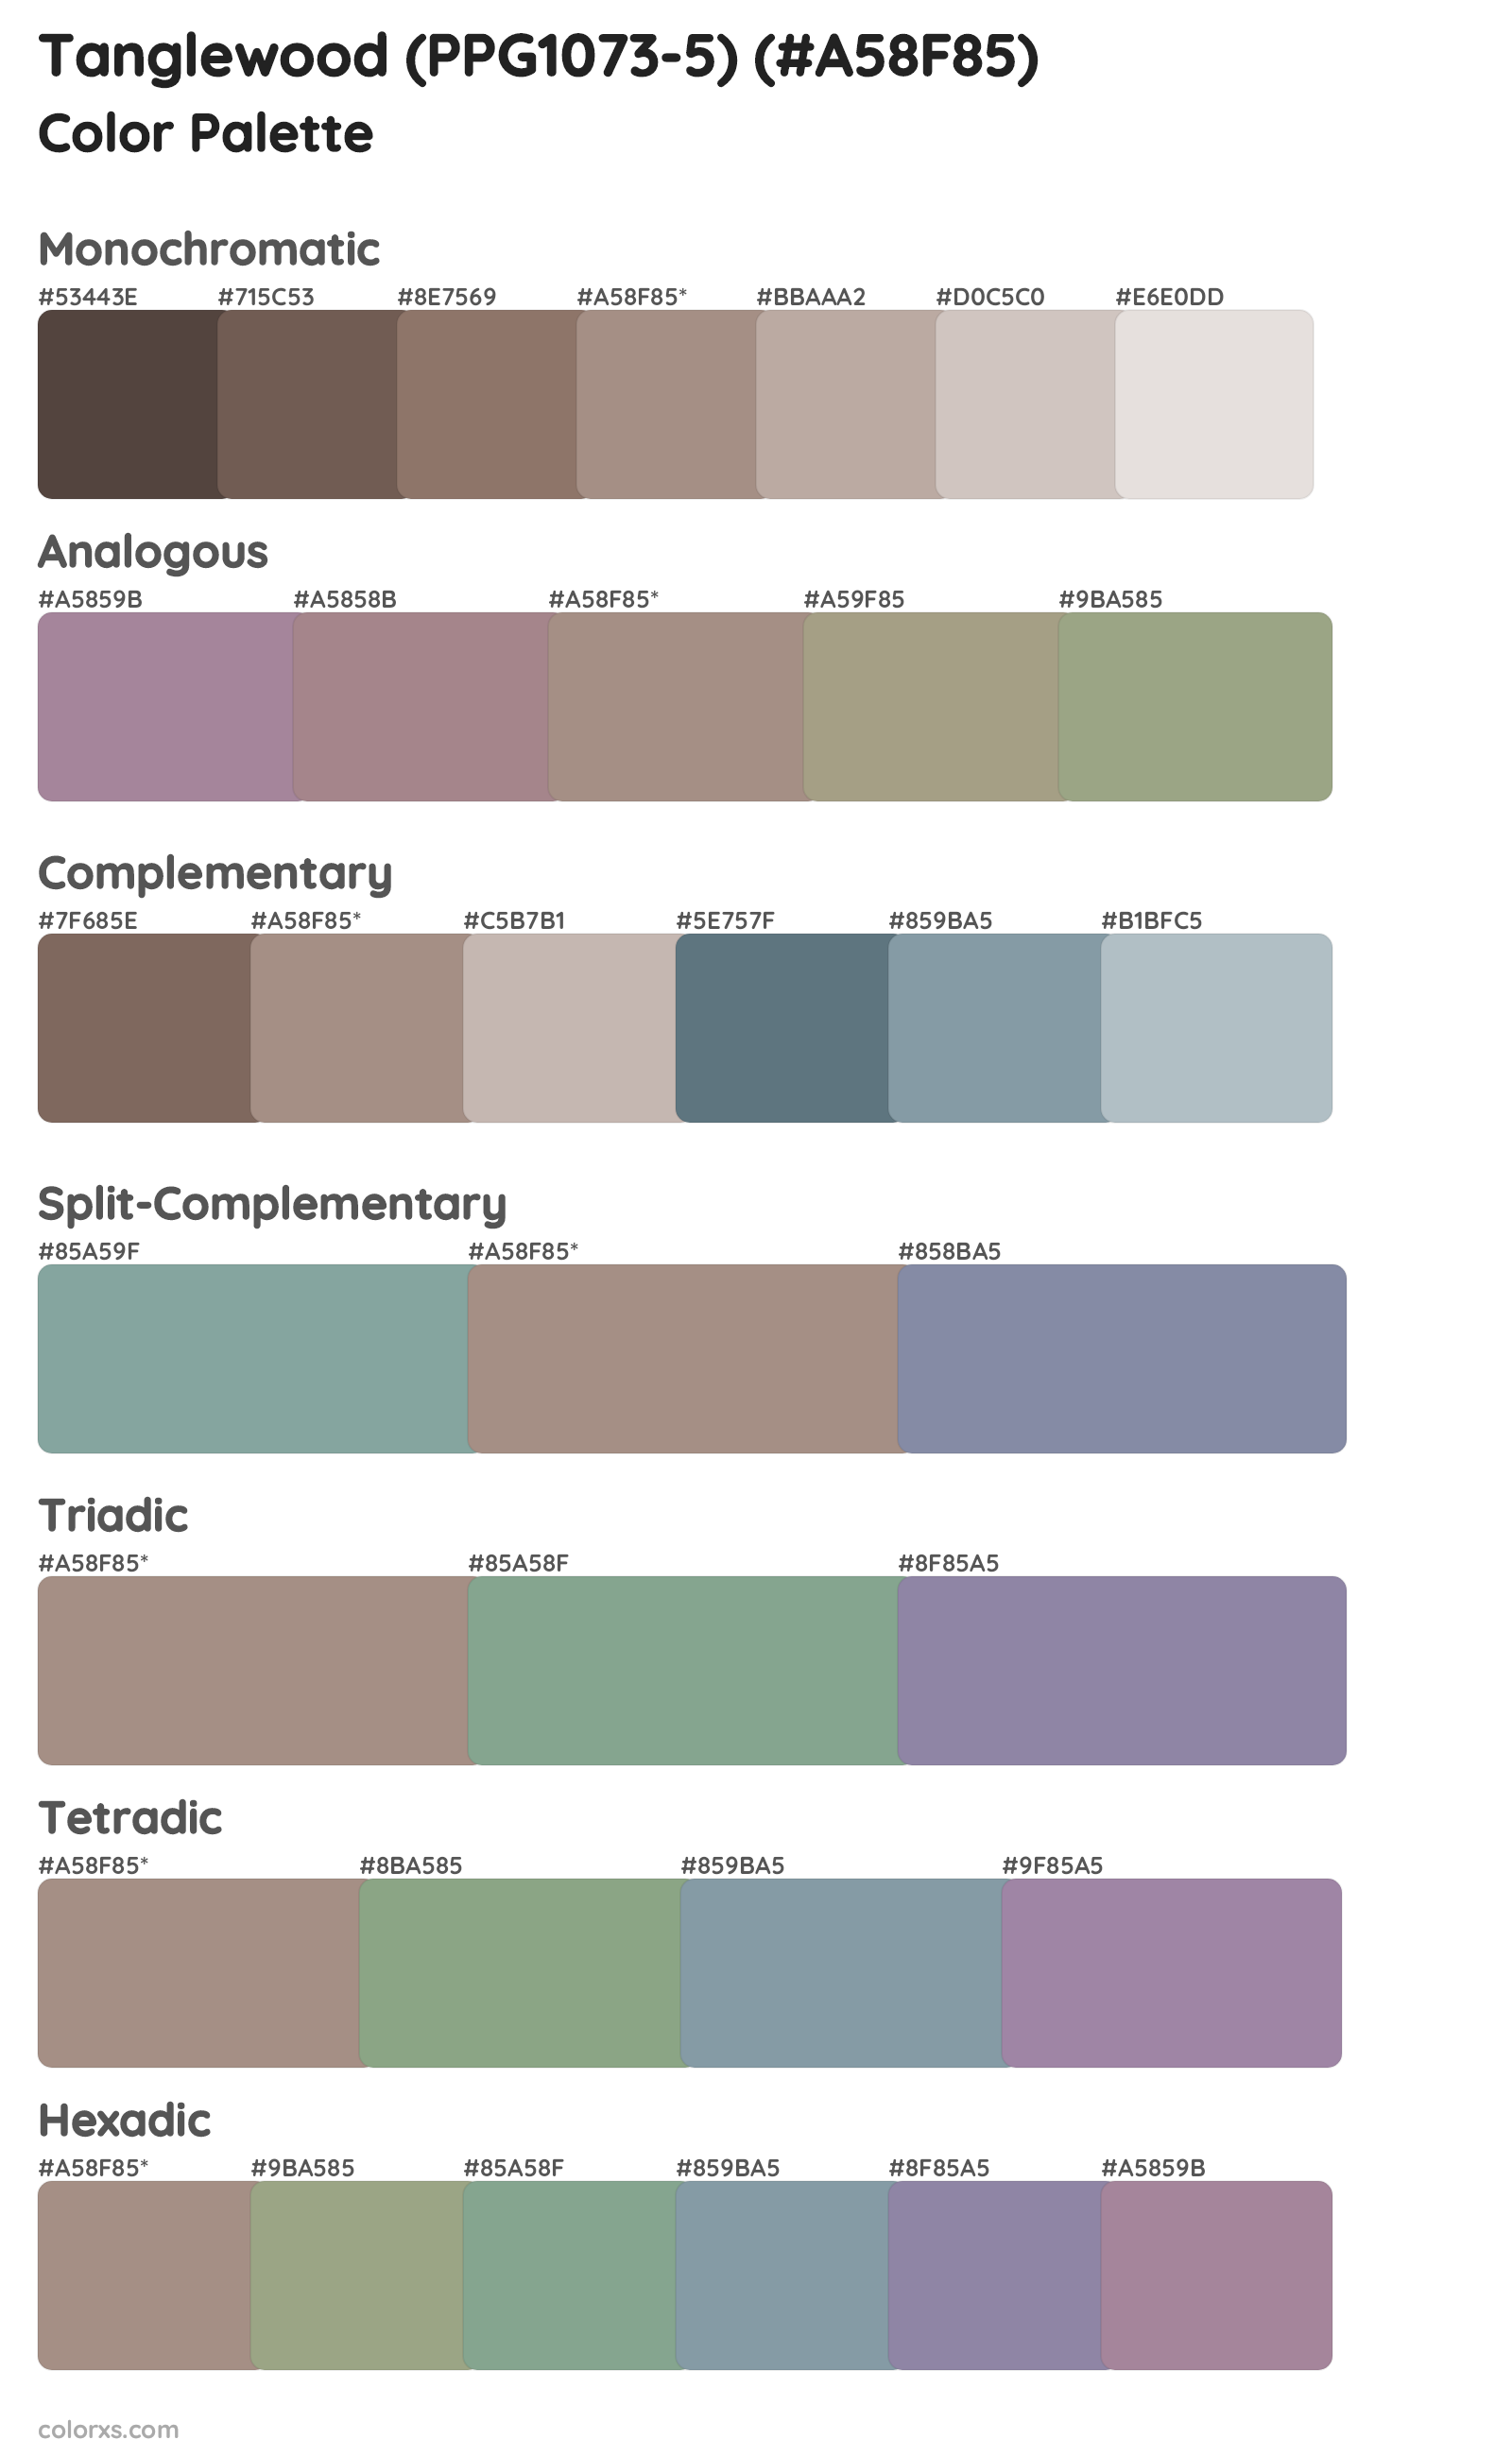 Tanglewood (PPG1073-5) Color Scheme Palettes